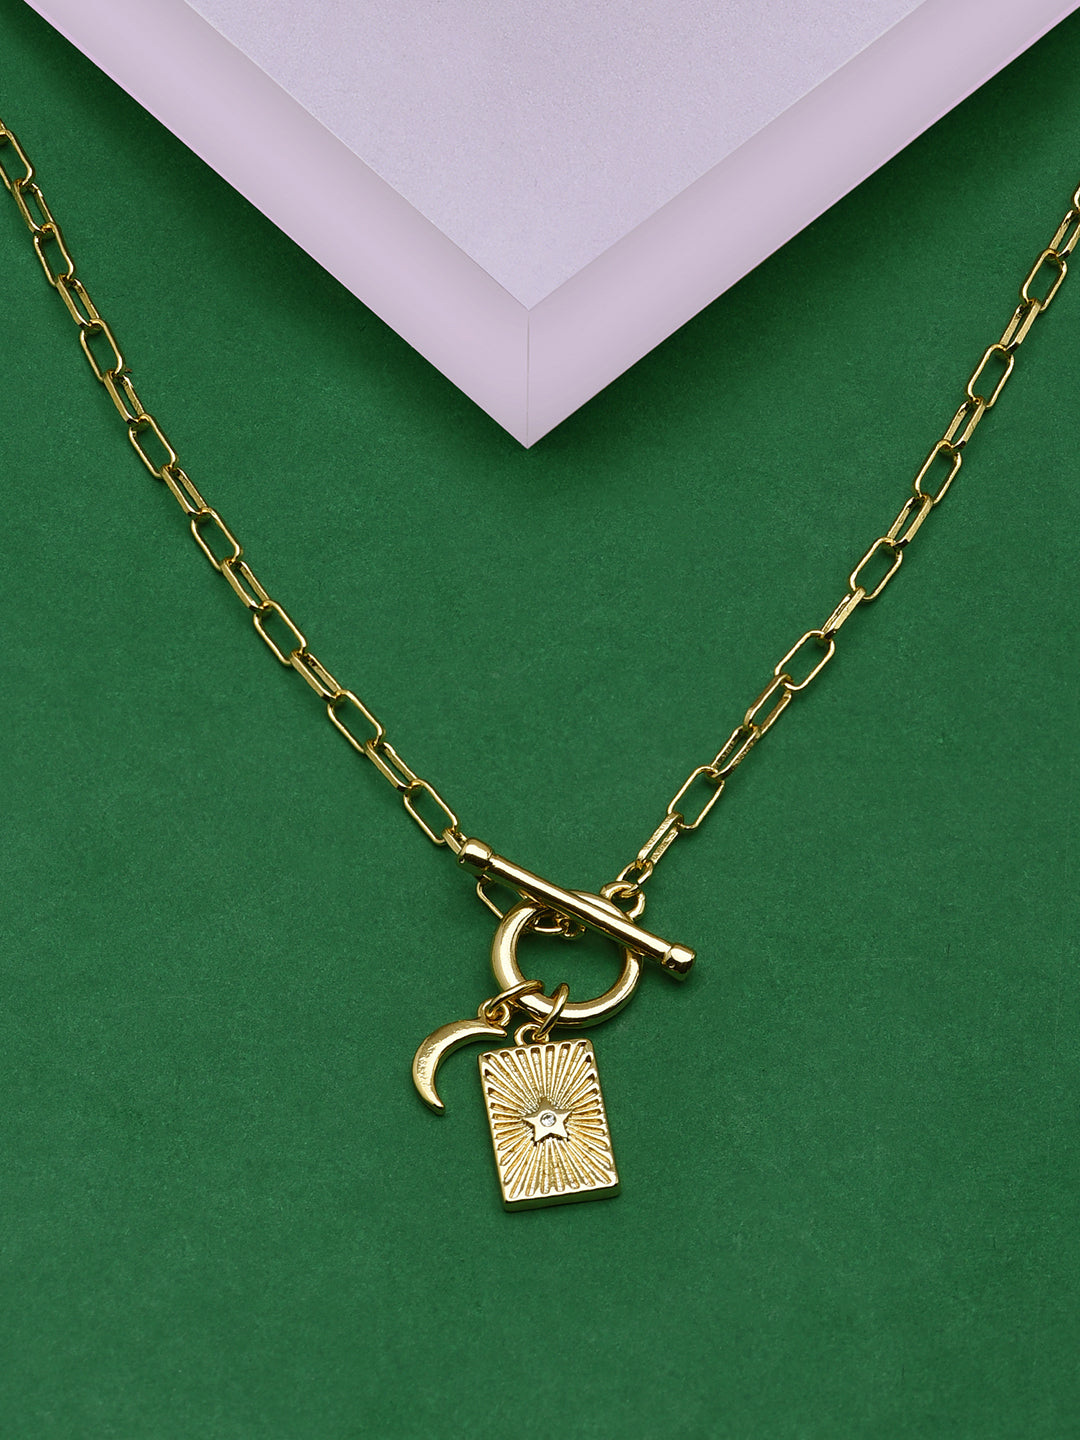 Buy U7Monogram Necklace A-Z 26 Letters Pendants 18K Gold/Platinum Plated  Square Capital Initial Necklaces for Women Men, Resizable Chain 20